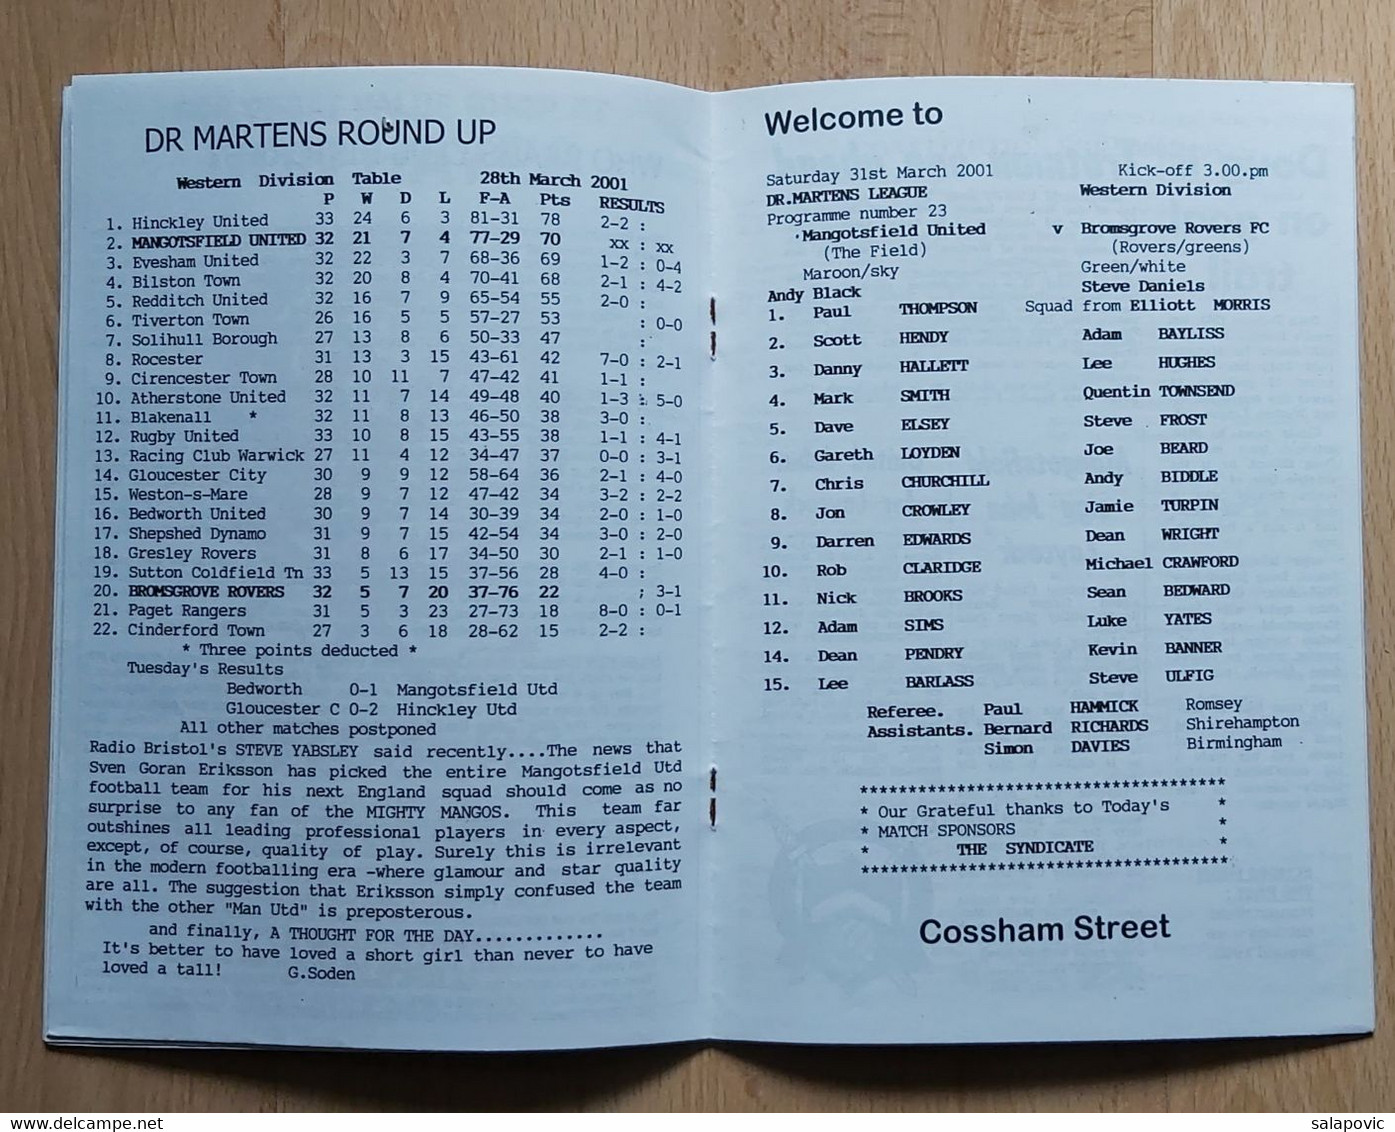 Mangotsfield United Vs Bromsgrove Rovers FC 31. March 2001 England Football Match Program - Books